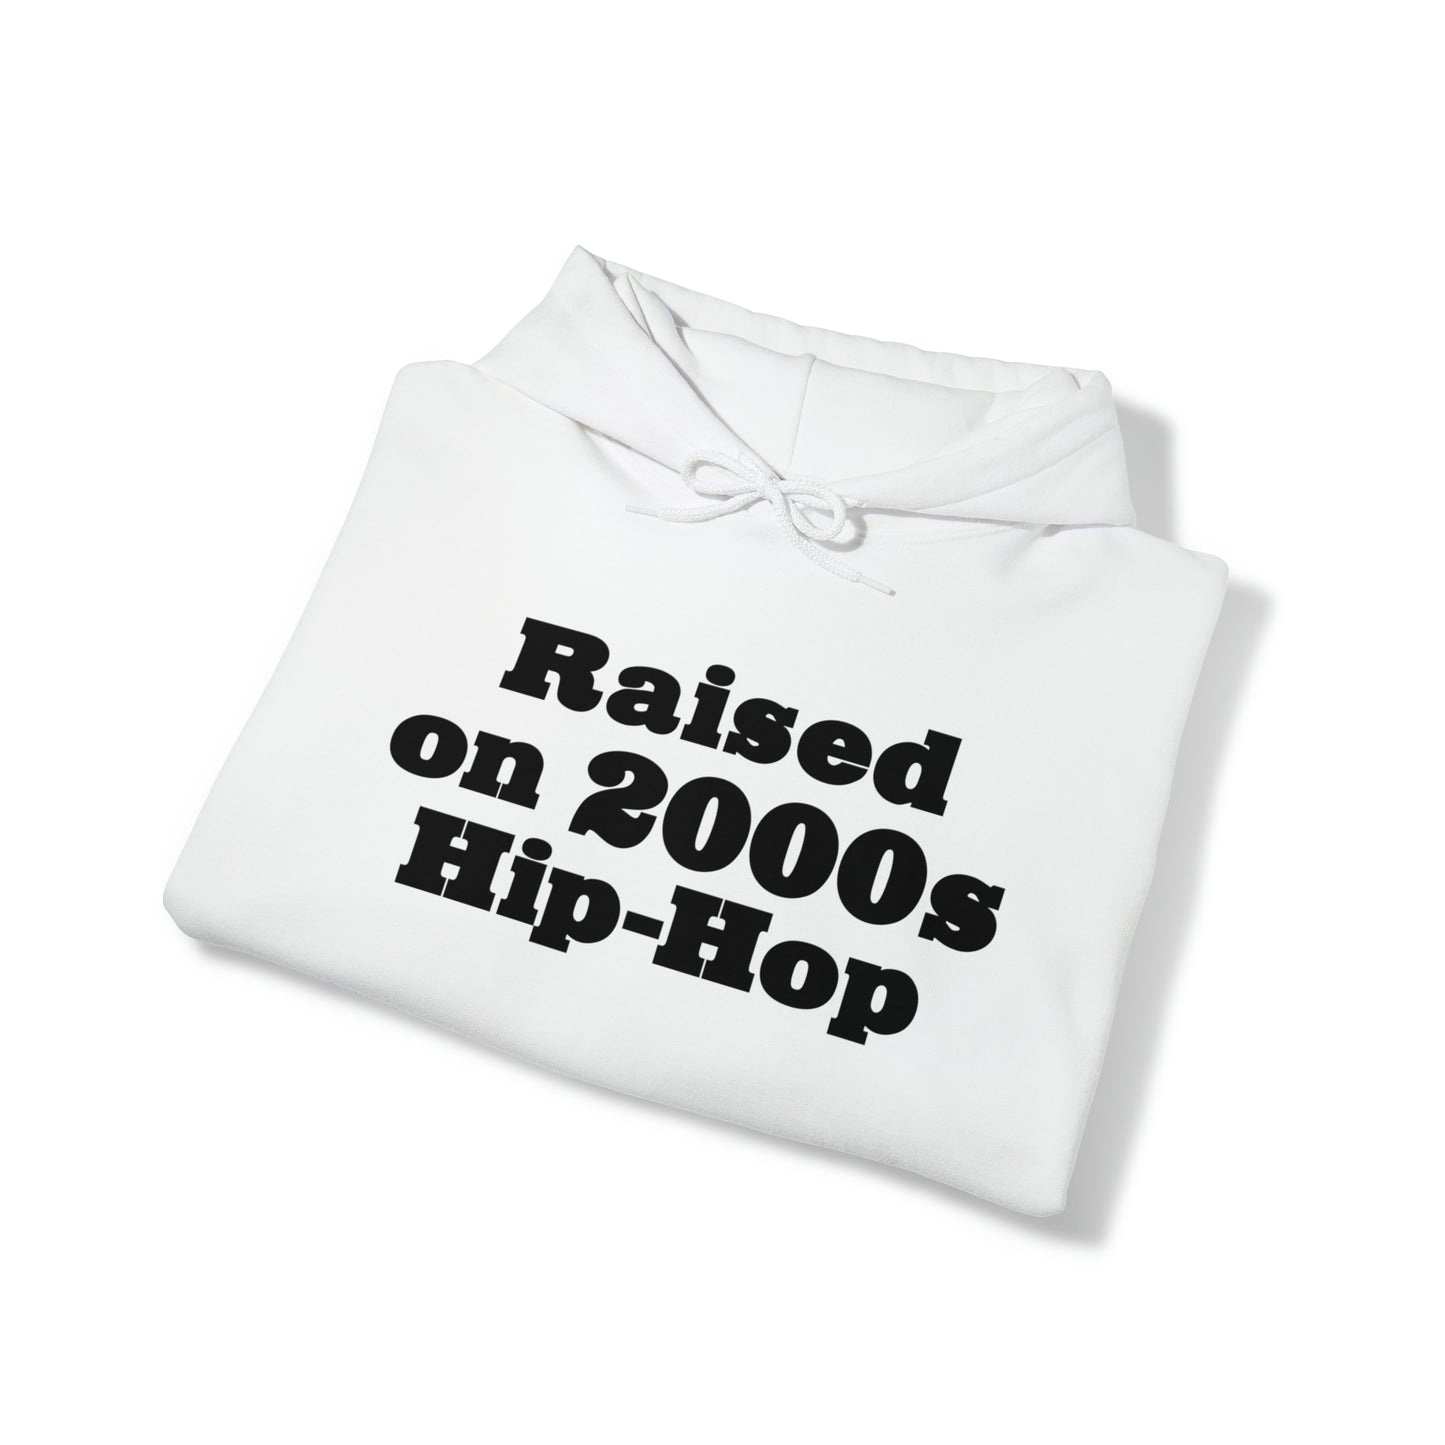 Raised on 2000s Hip-Hop Hoodie Great Gift for a 2000s Hip-Hop & Rap Lover Sweatshirt